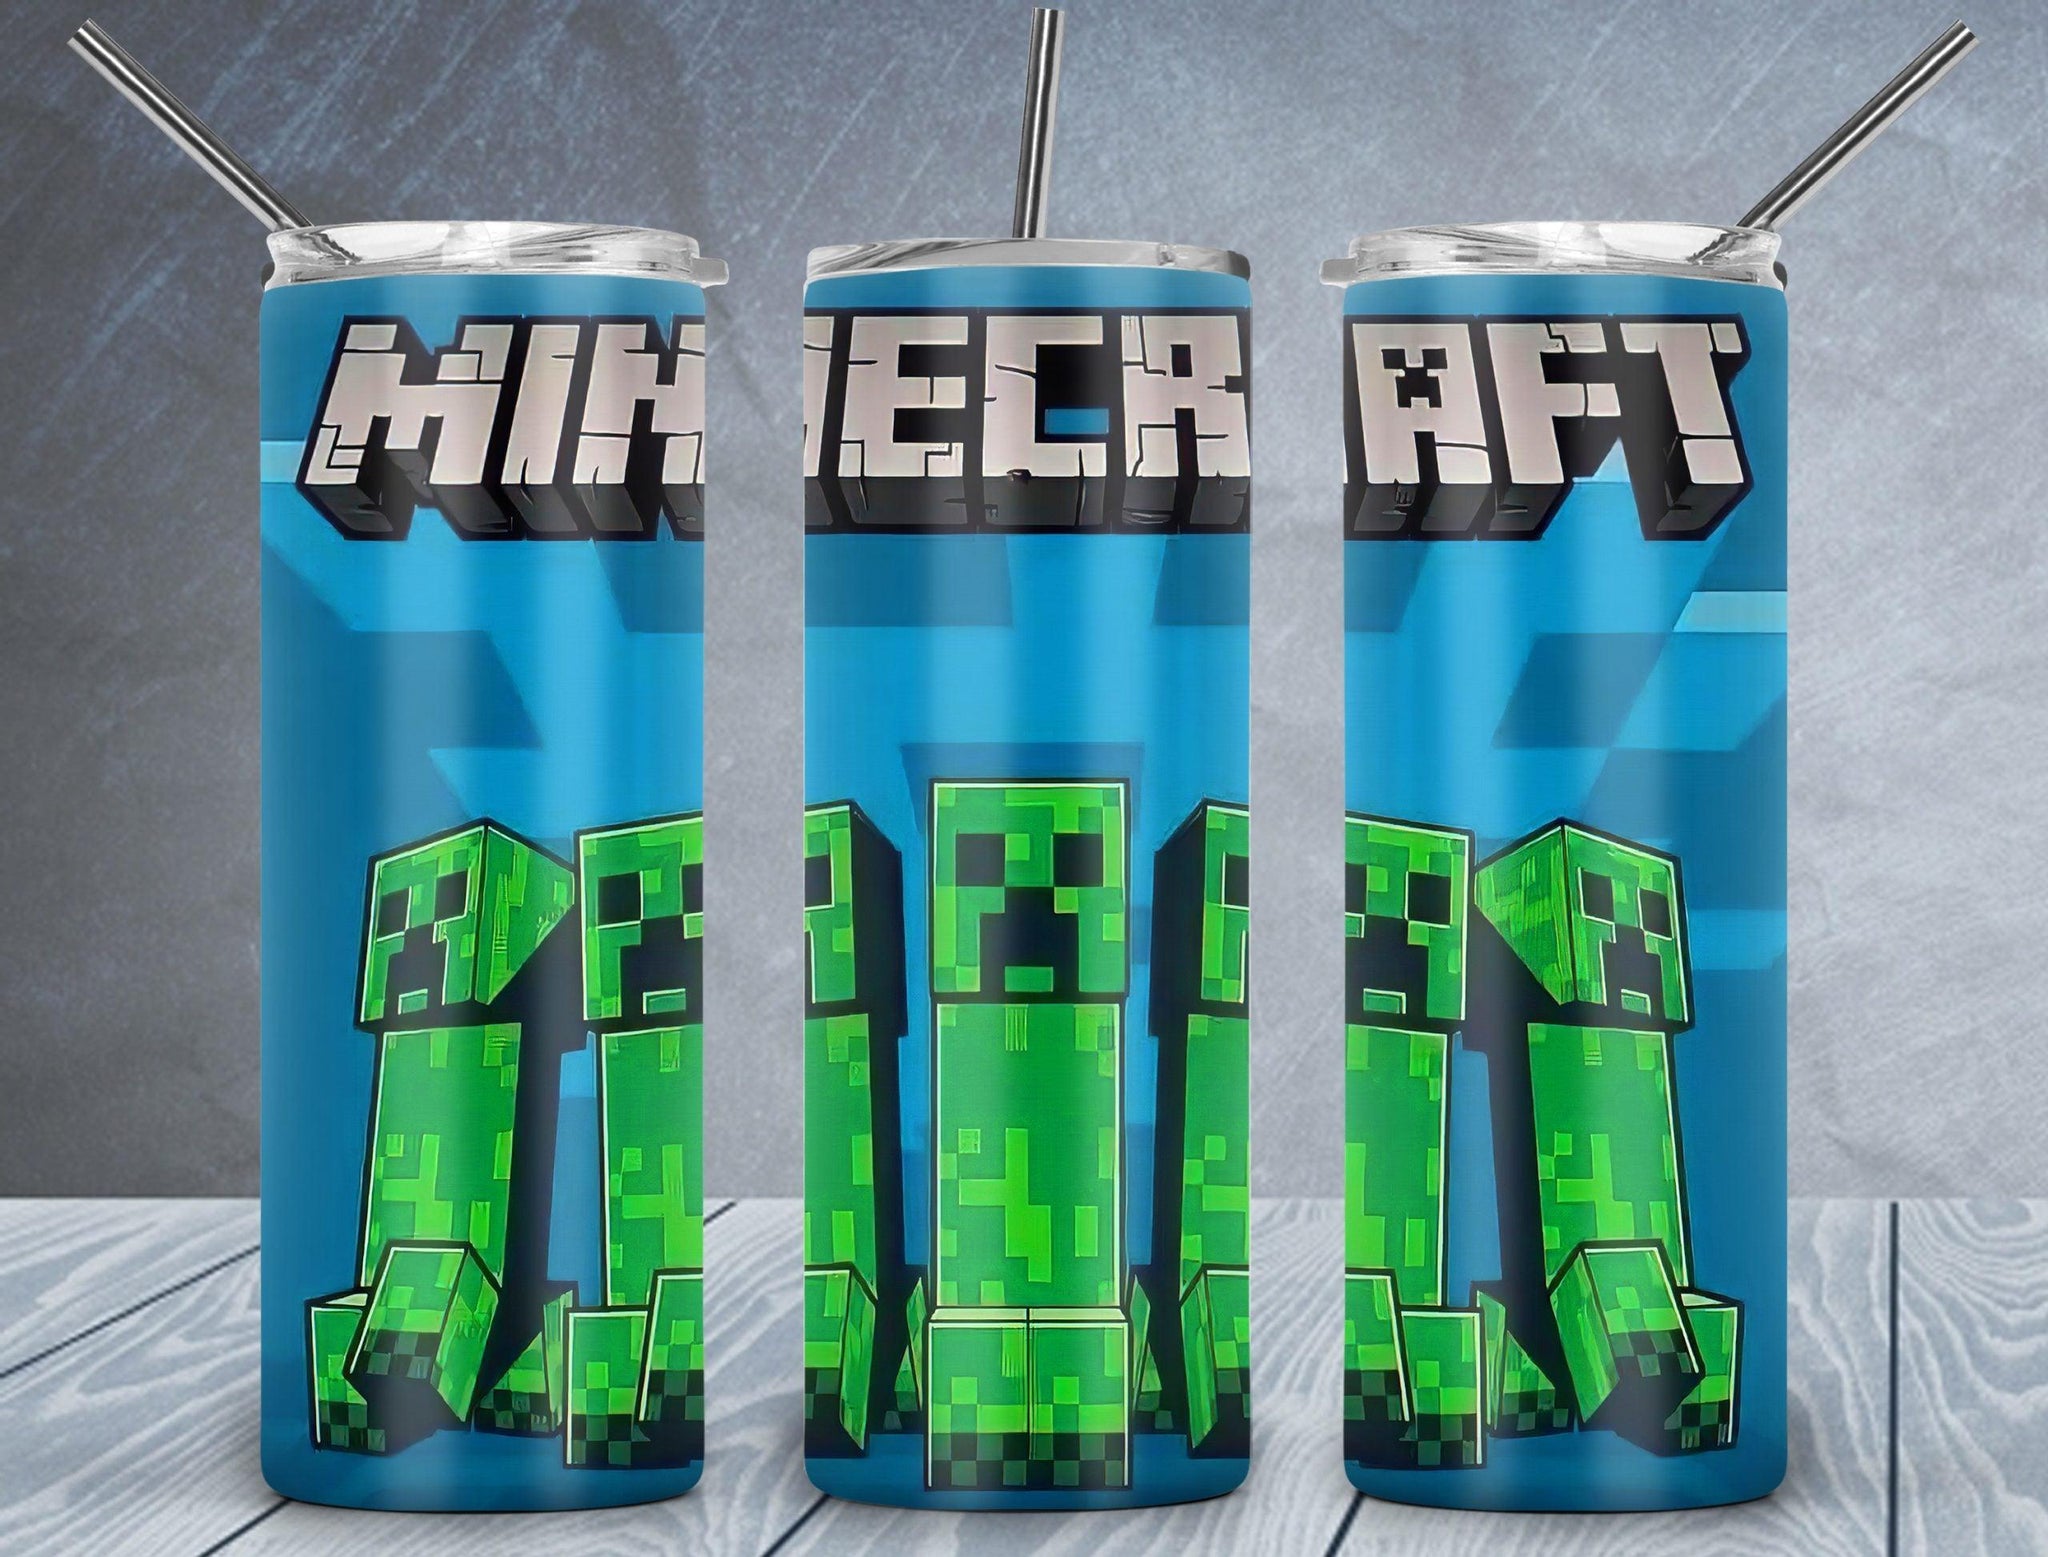 Minecraft Tumbler Wrap PNG, Creeper 20oz Skinny Tumbler Design, Sublimation  Designs PNG File - TheDigitalSVG